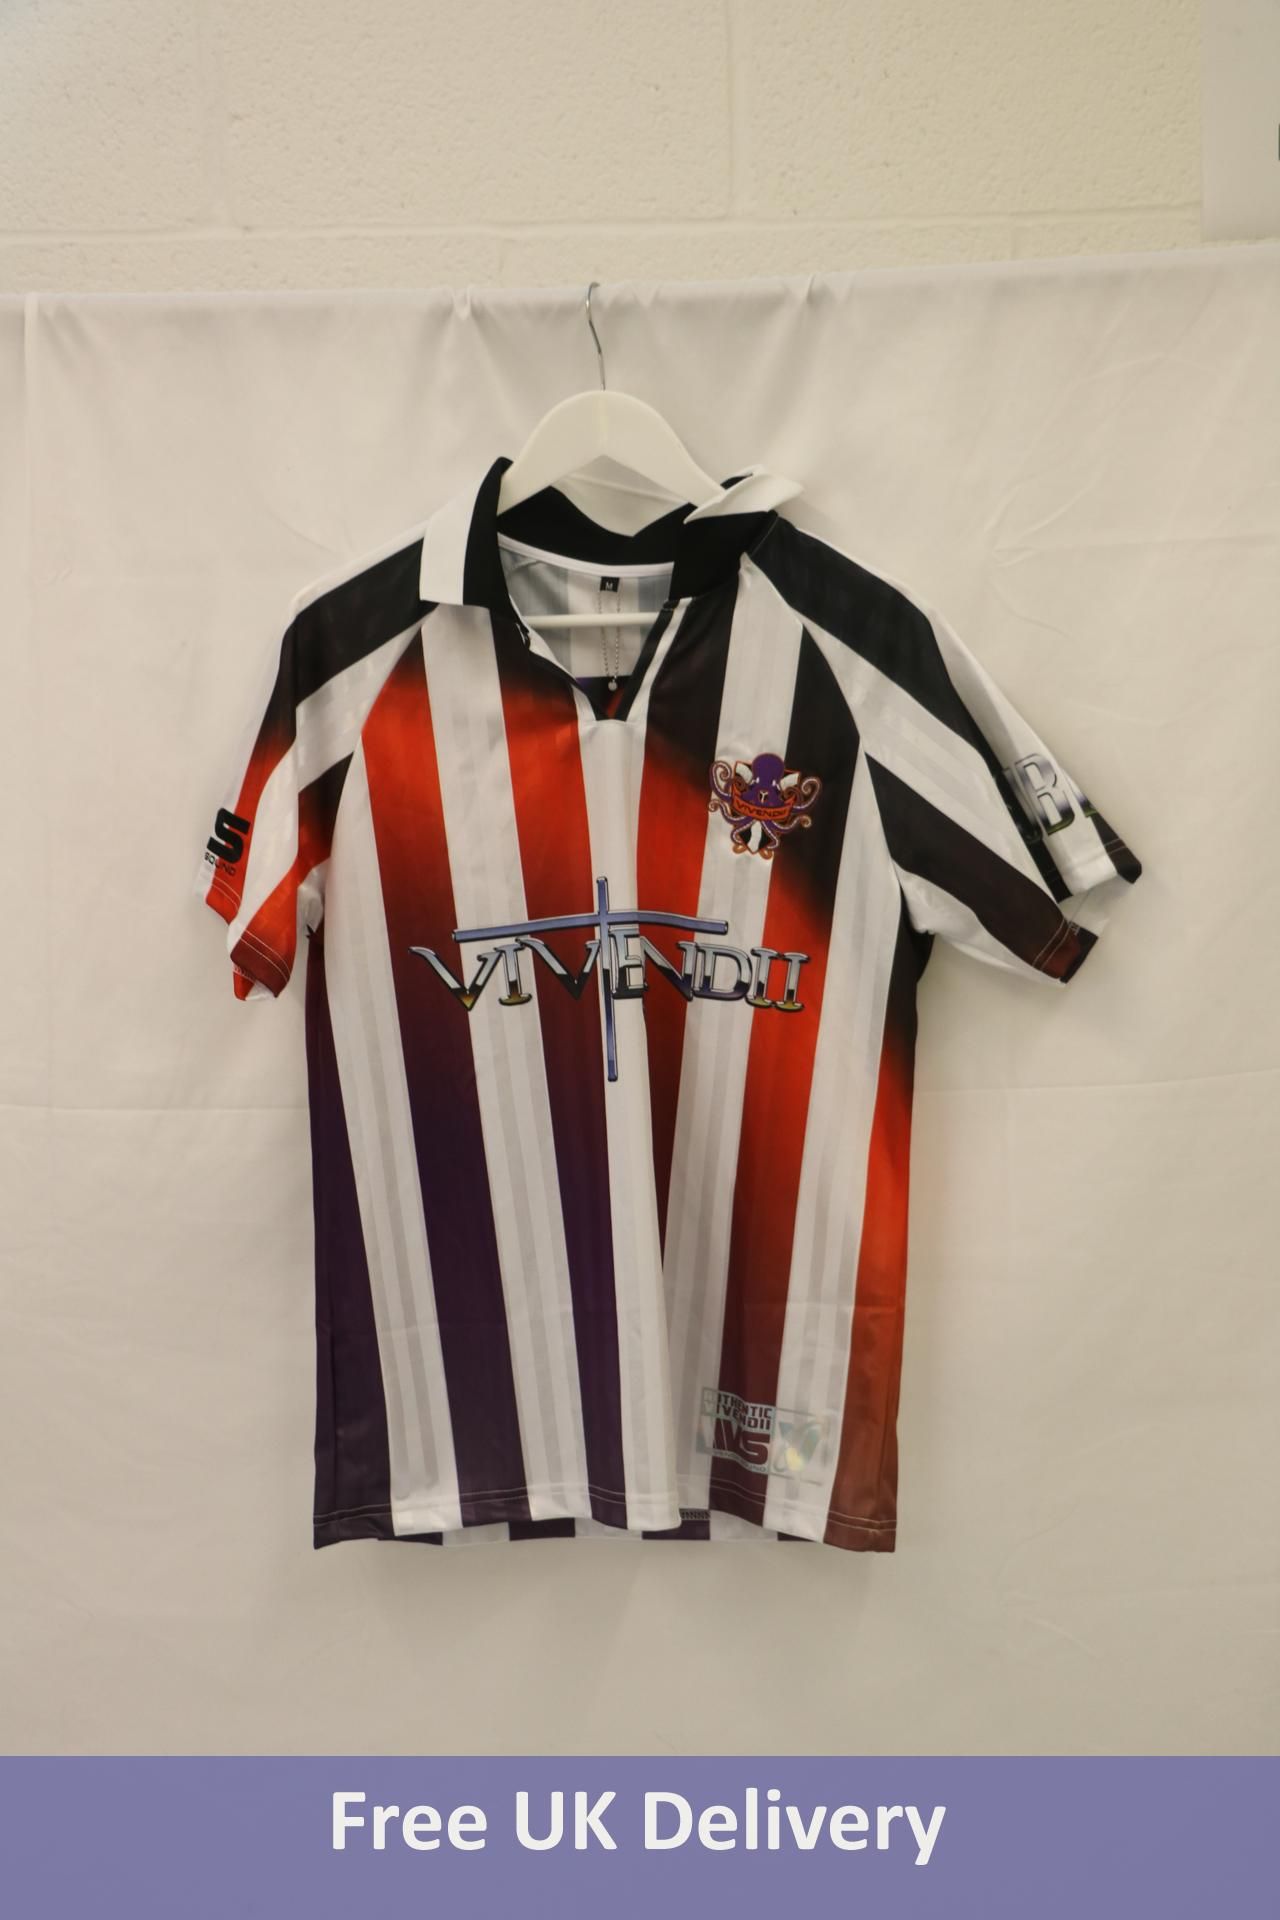 JBL Vivendi VVD Football Shirt, Red/White, Size M